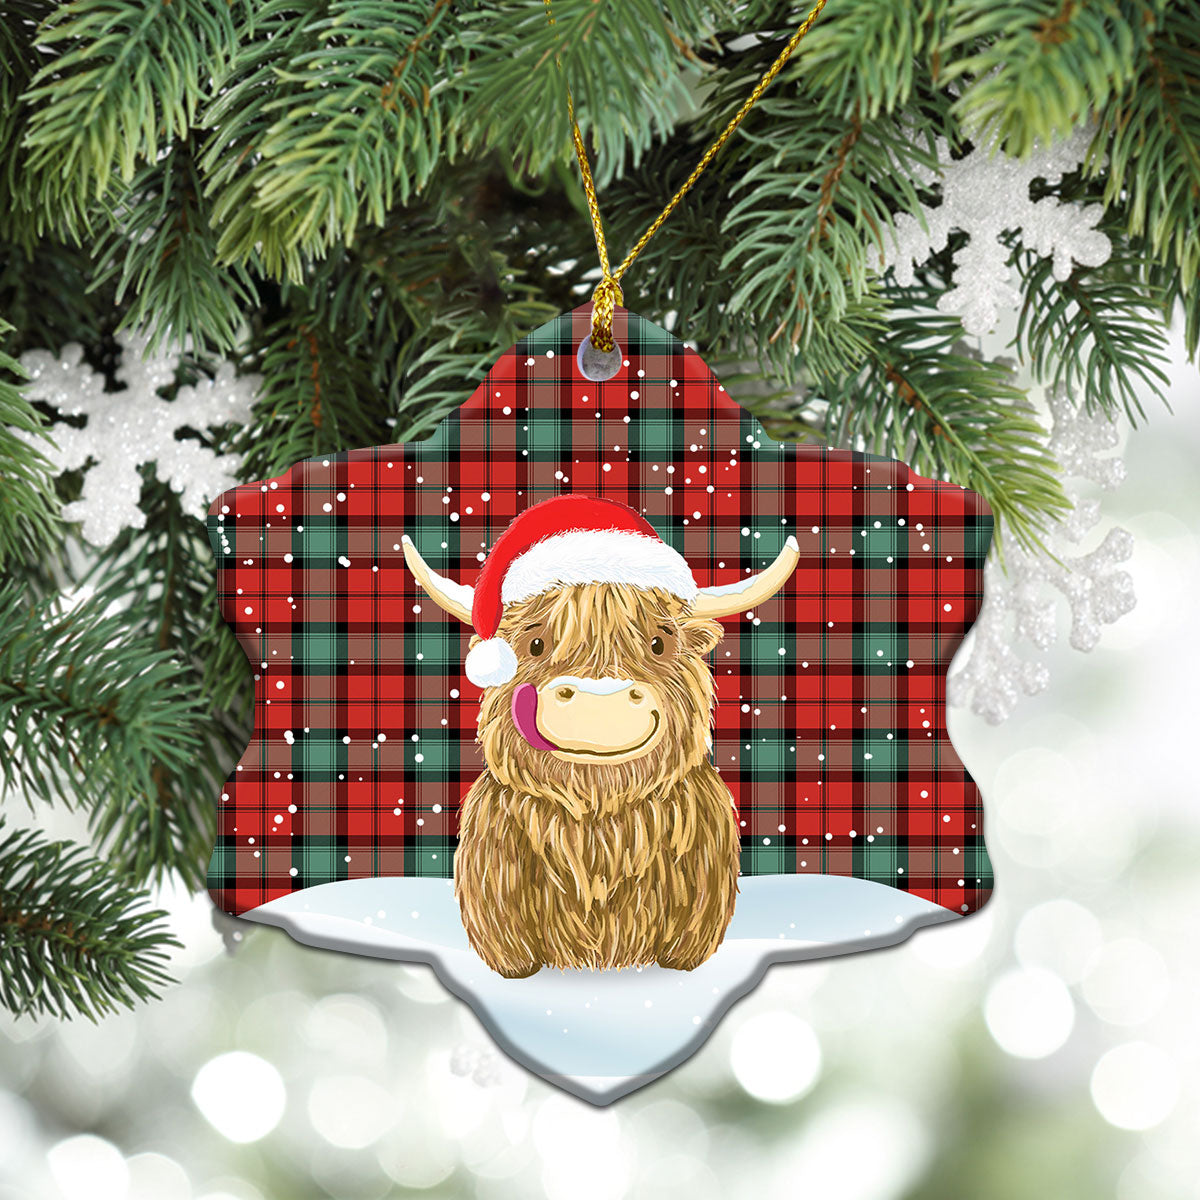 Kerr Ancient Tartan Christmas Ceramic Ornament - Highland Cows Style